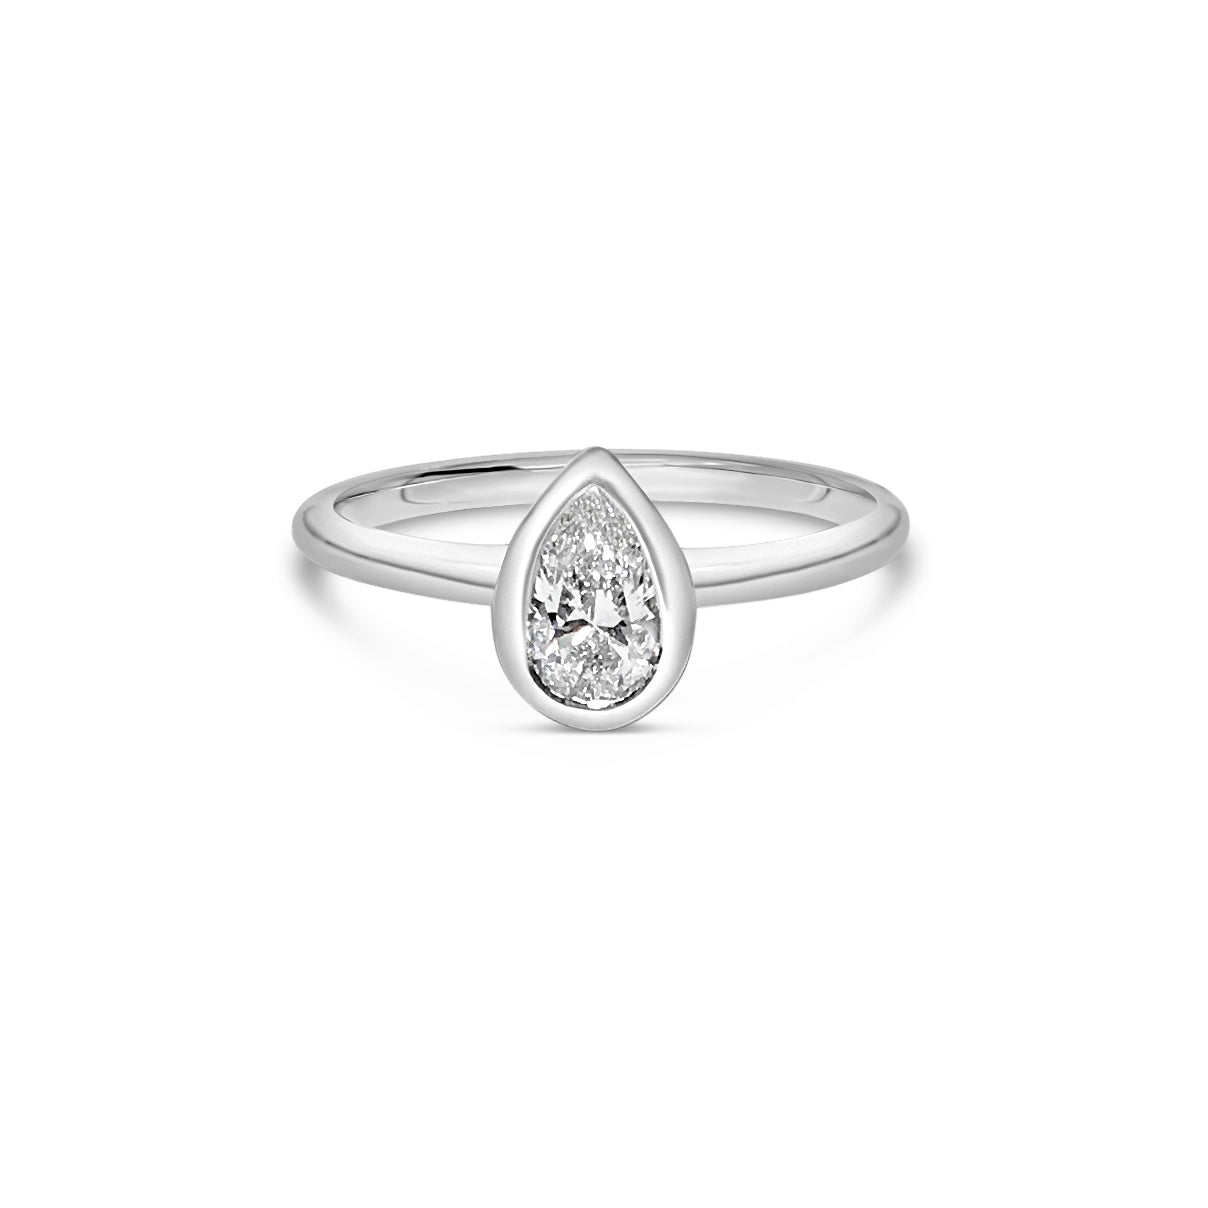 ARIELA || 0.4ct pear diamond ring in white gold 14k - LOFT.bijoux || Custom jewelry & wedding rings / Bijoux sur mesure & bagues de mariage || Montreal